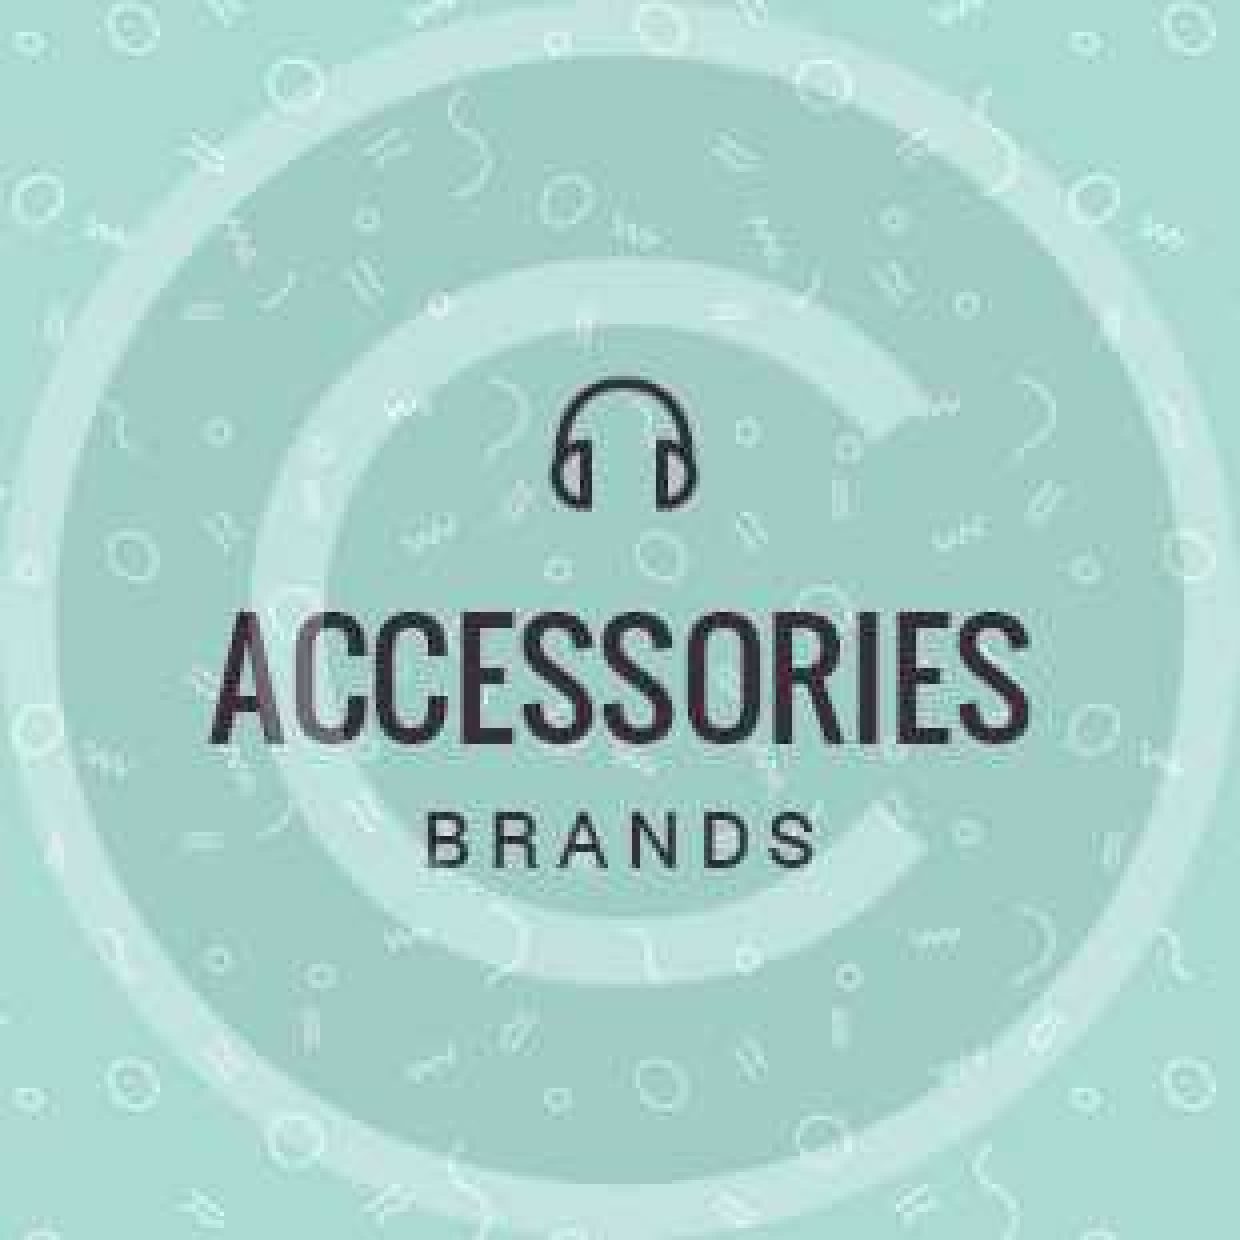 Accessories brands